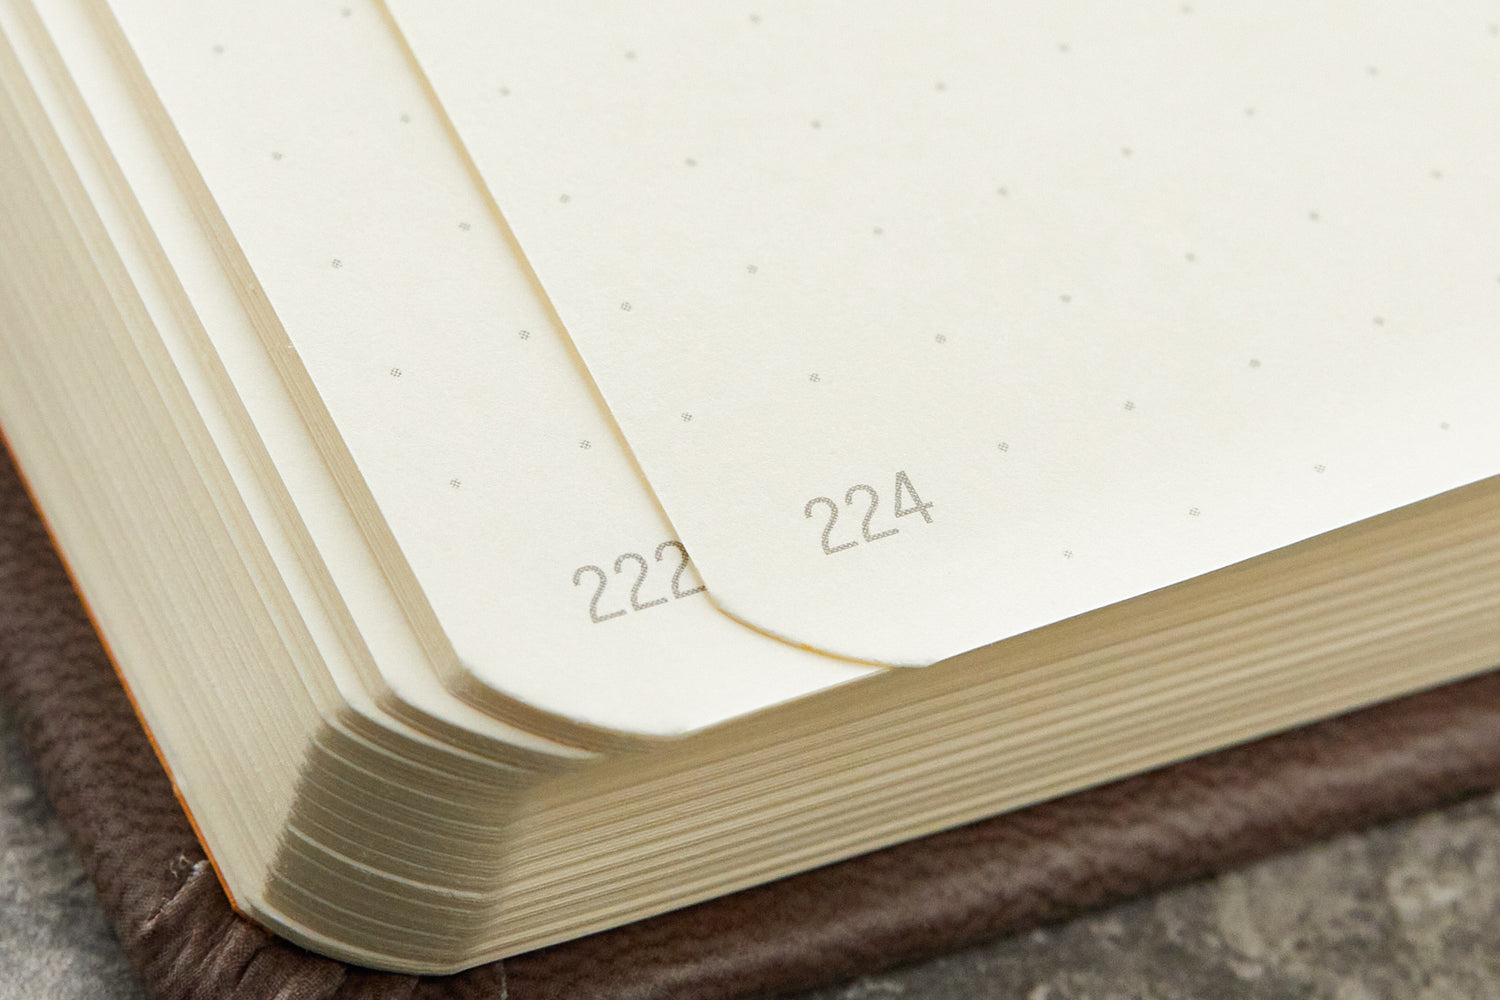 fleury paul - dotted grid 8 5x11 sketchbook dot - AbeBooks